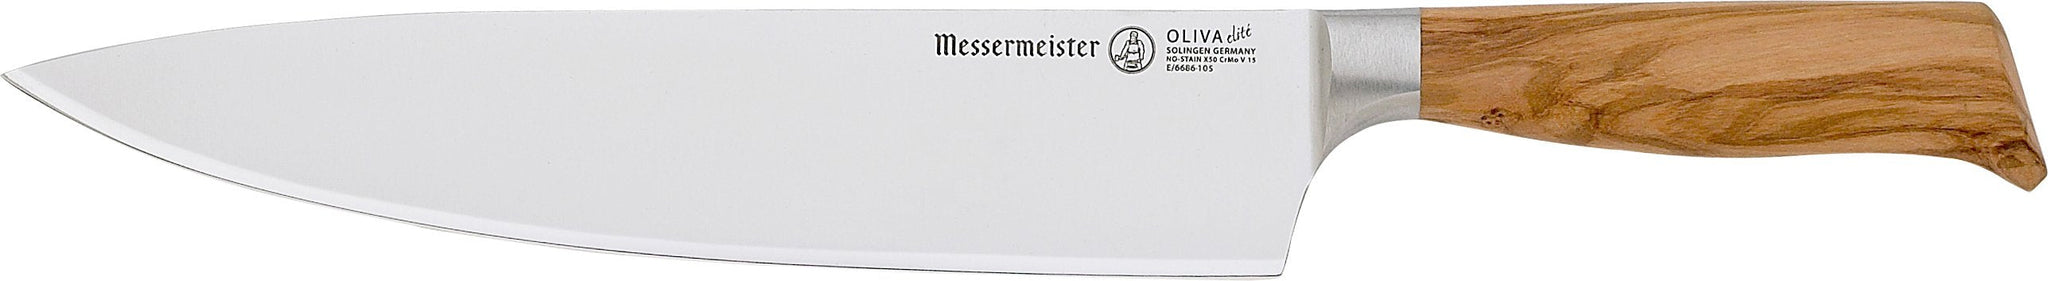 Messermeister - Oliva Elite 10" Stealth Chef's Knife - E/6686-10S